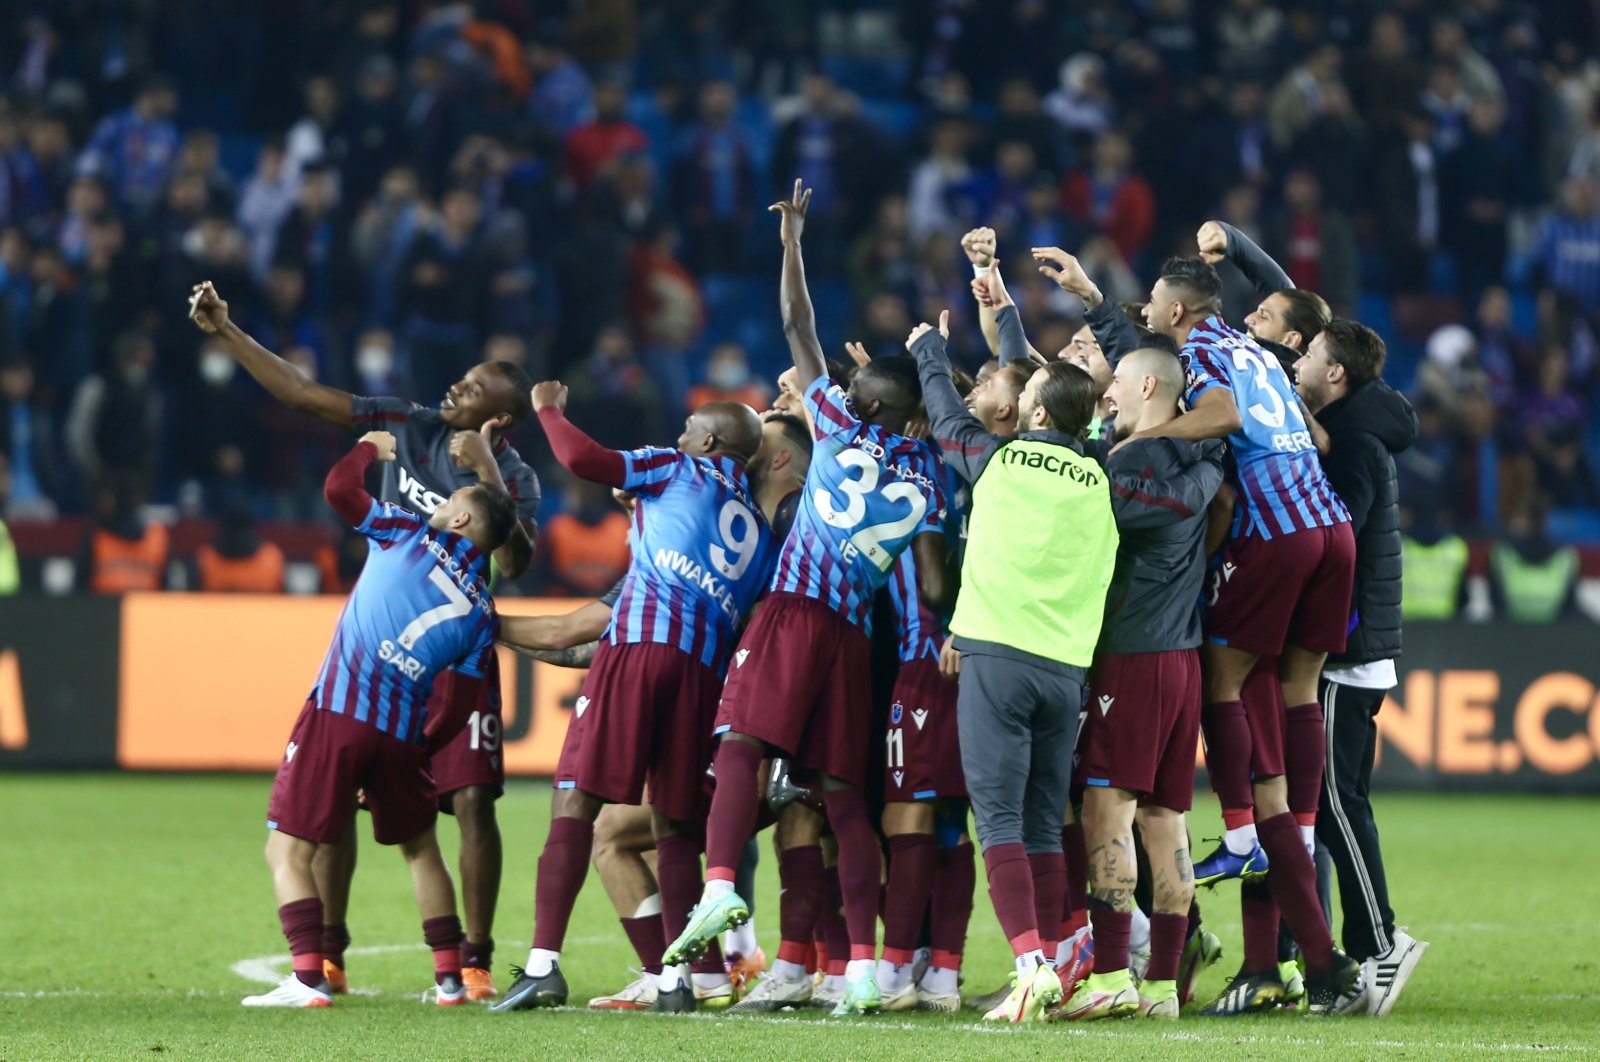 Trabzonspor players celebrate after winning a Turkish Süper Lig match against Adana Demirspor, at the Medical Park Stadium, in Trabzon, Turkey, Dec. 4, 2021. (AA Photo)